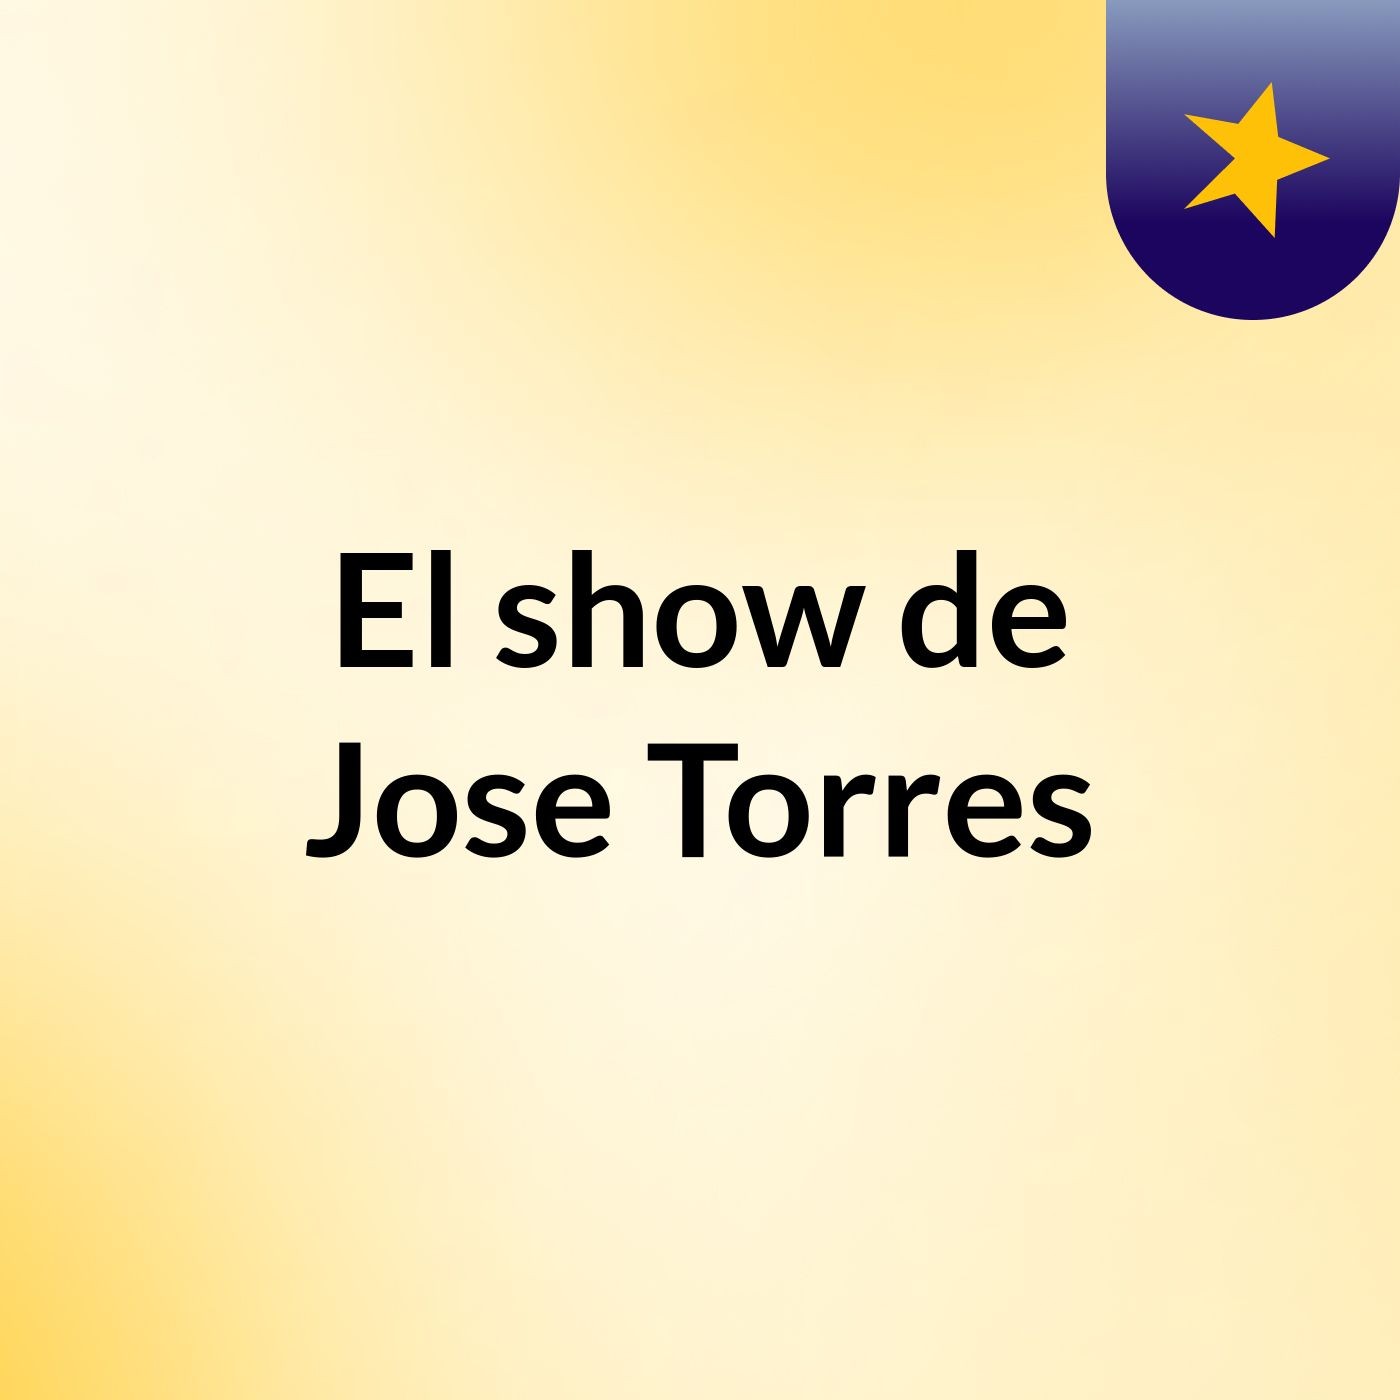 El show de Jose Torres